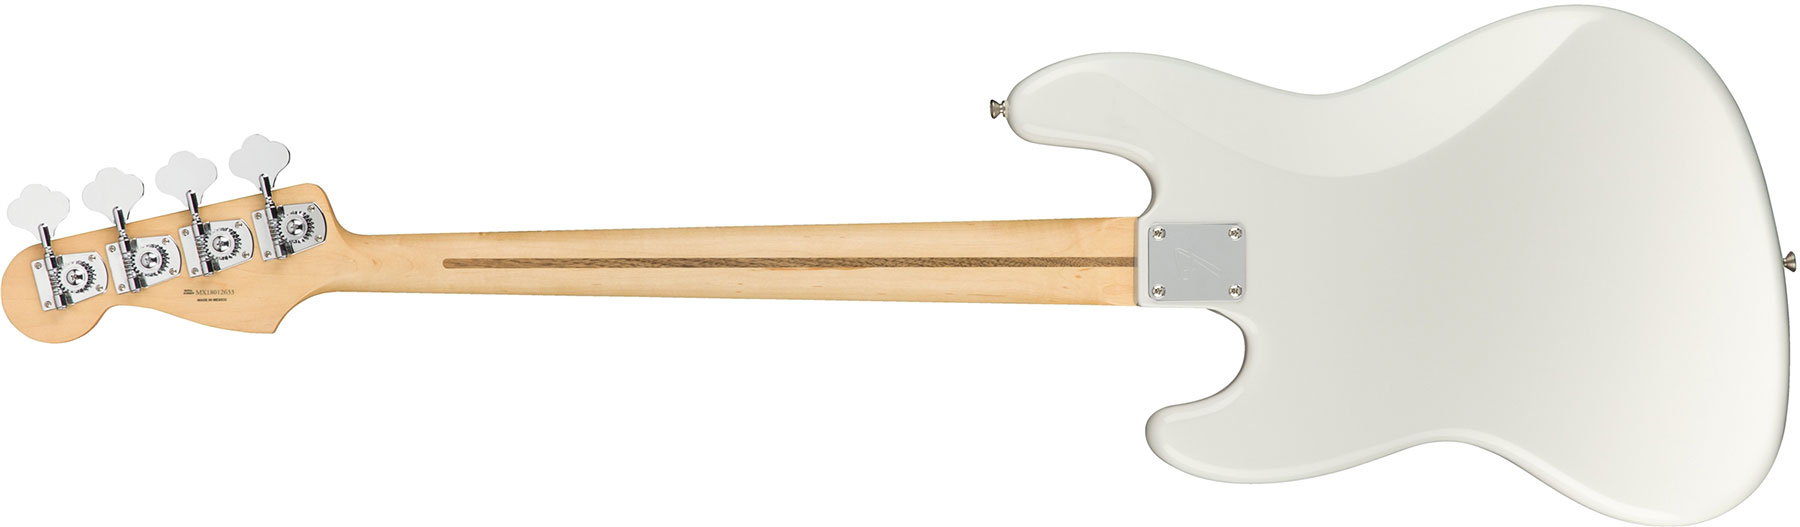 Fender Jazz Bass Player Mex Pf - Polar White - Bajo eléctrico de cuerpo sólido - Variation 1